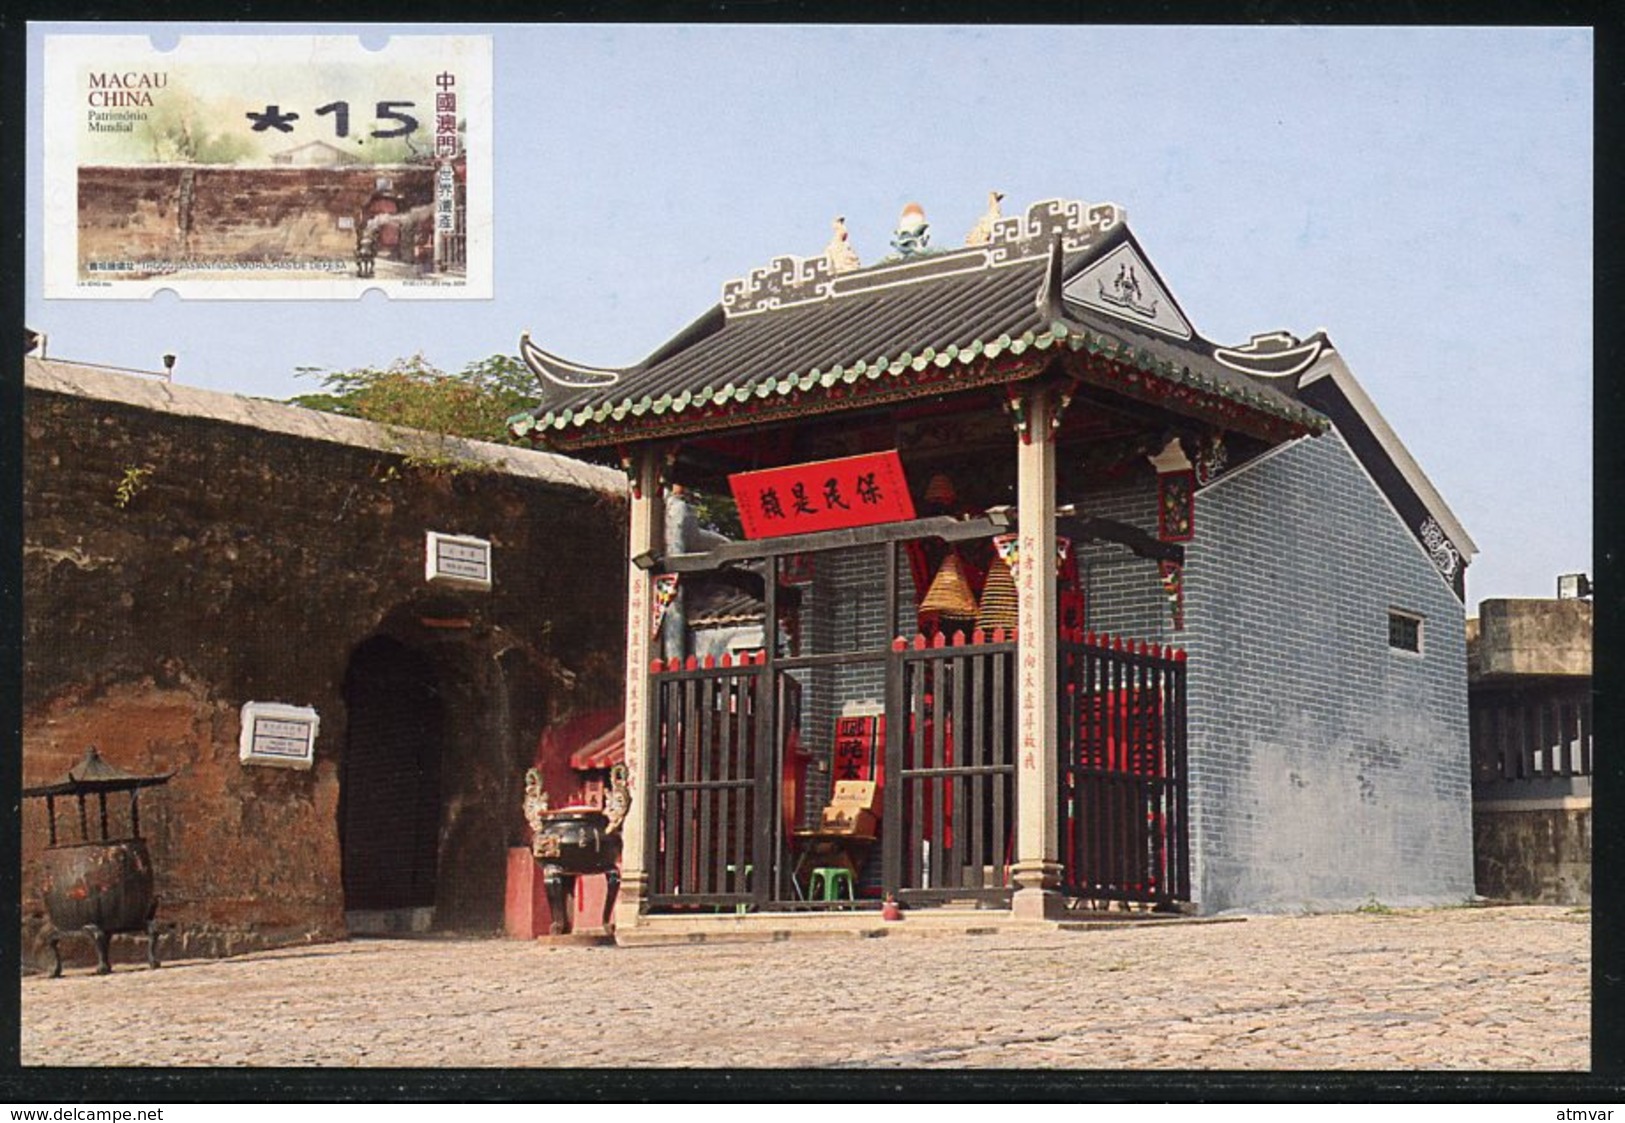 MACAU / MACAO (2008). ATM Nagler - Patrimonio Mundial, World Heritage - Old City Walls - Na Tcha Temple - Distributors